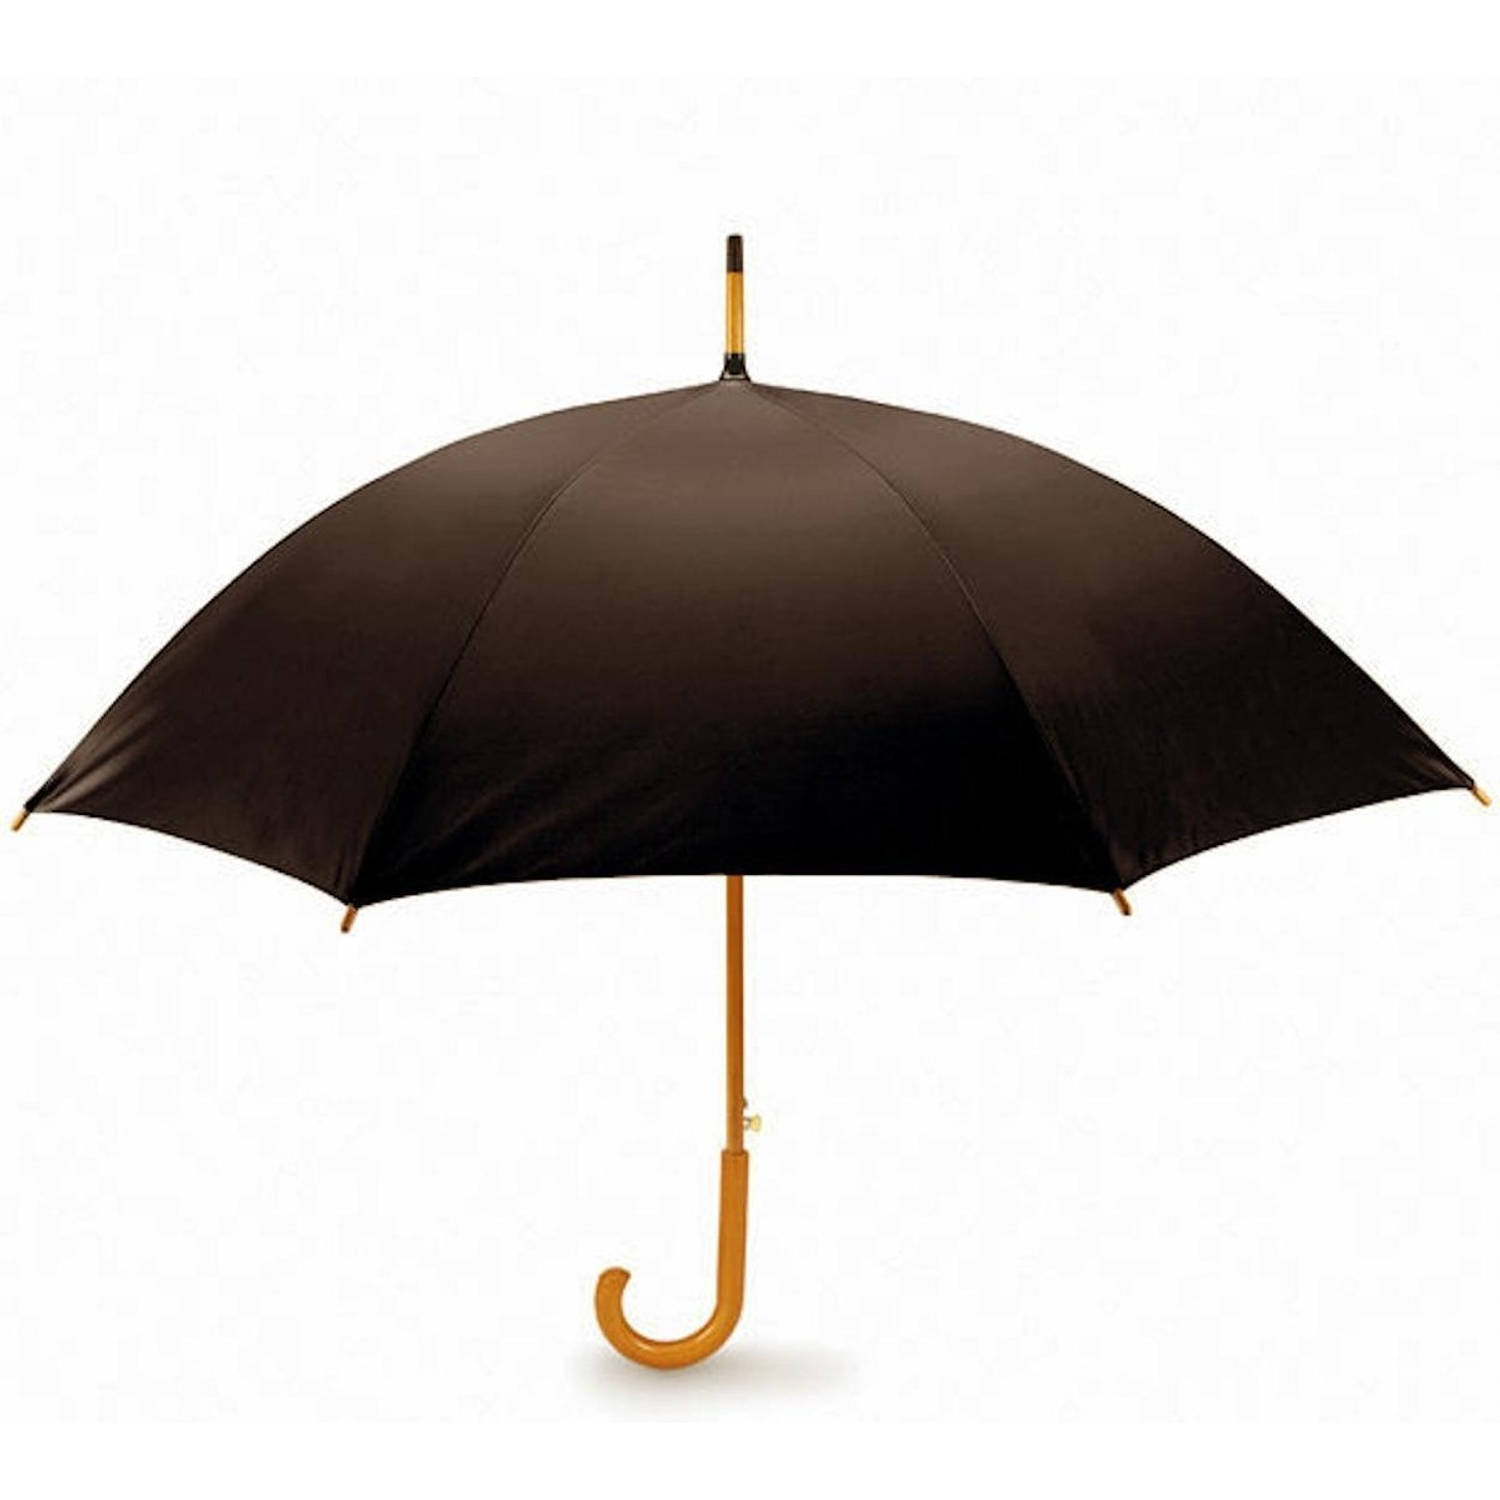 Bitterheid grind R Storm paraplu - Stormparaplu - Paraplu met houten handvat - Paraplu -  Houten Paraplu - Kwaliteit paraplu - Donker bruin | Blokker